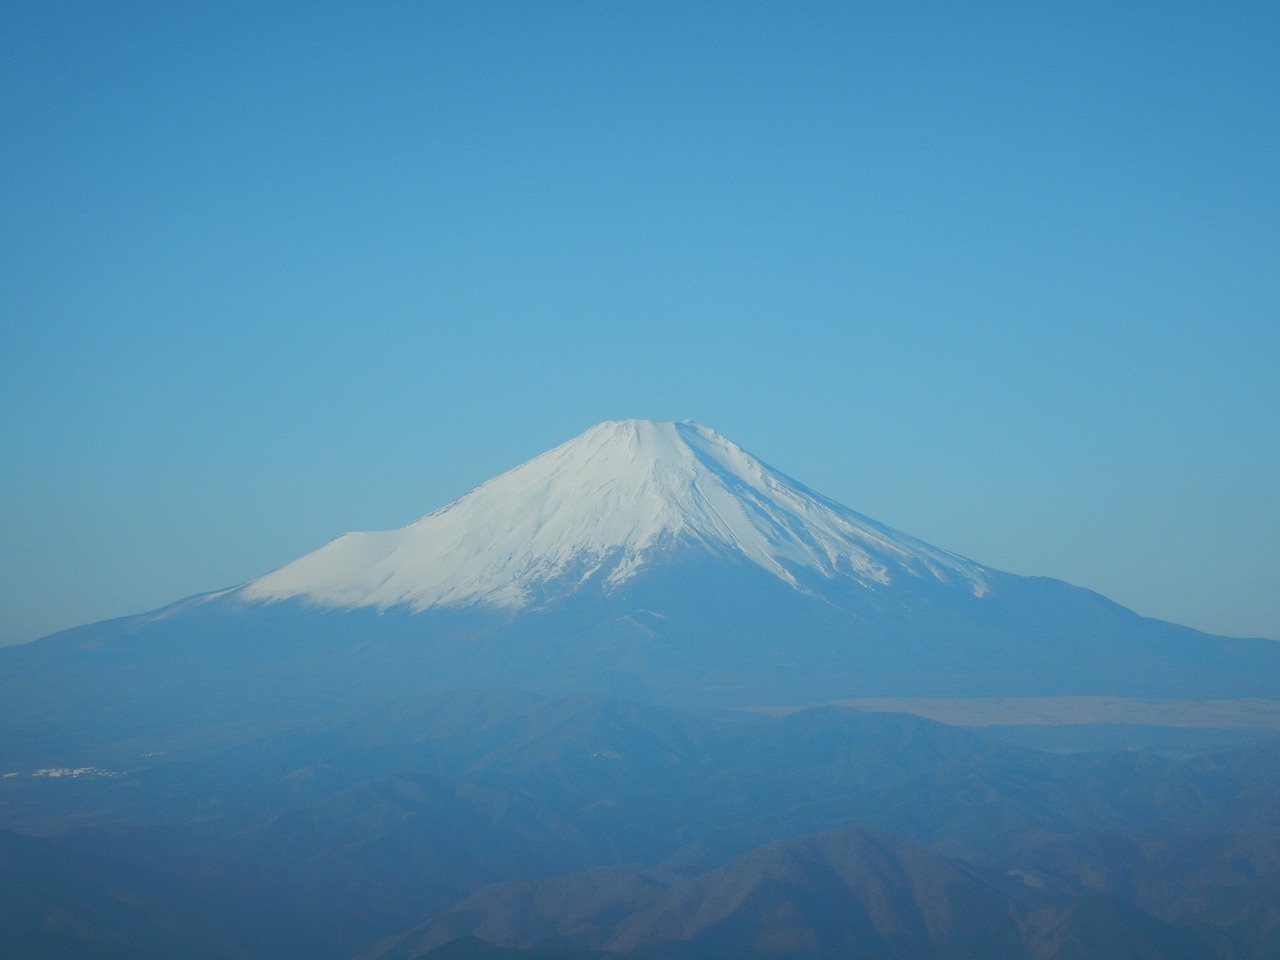 THE富士山